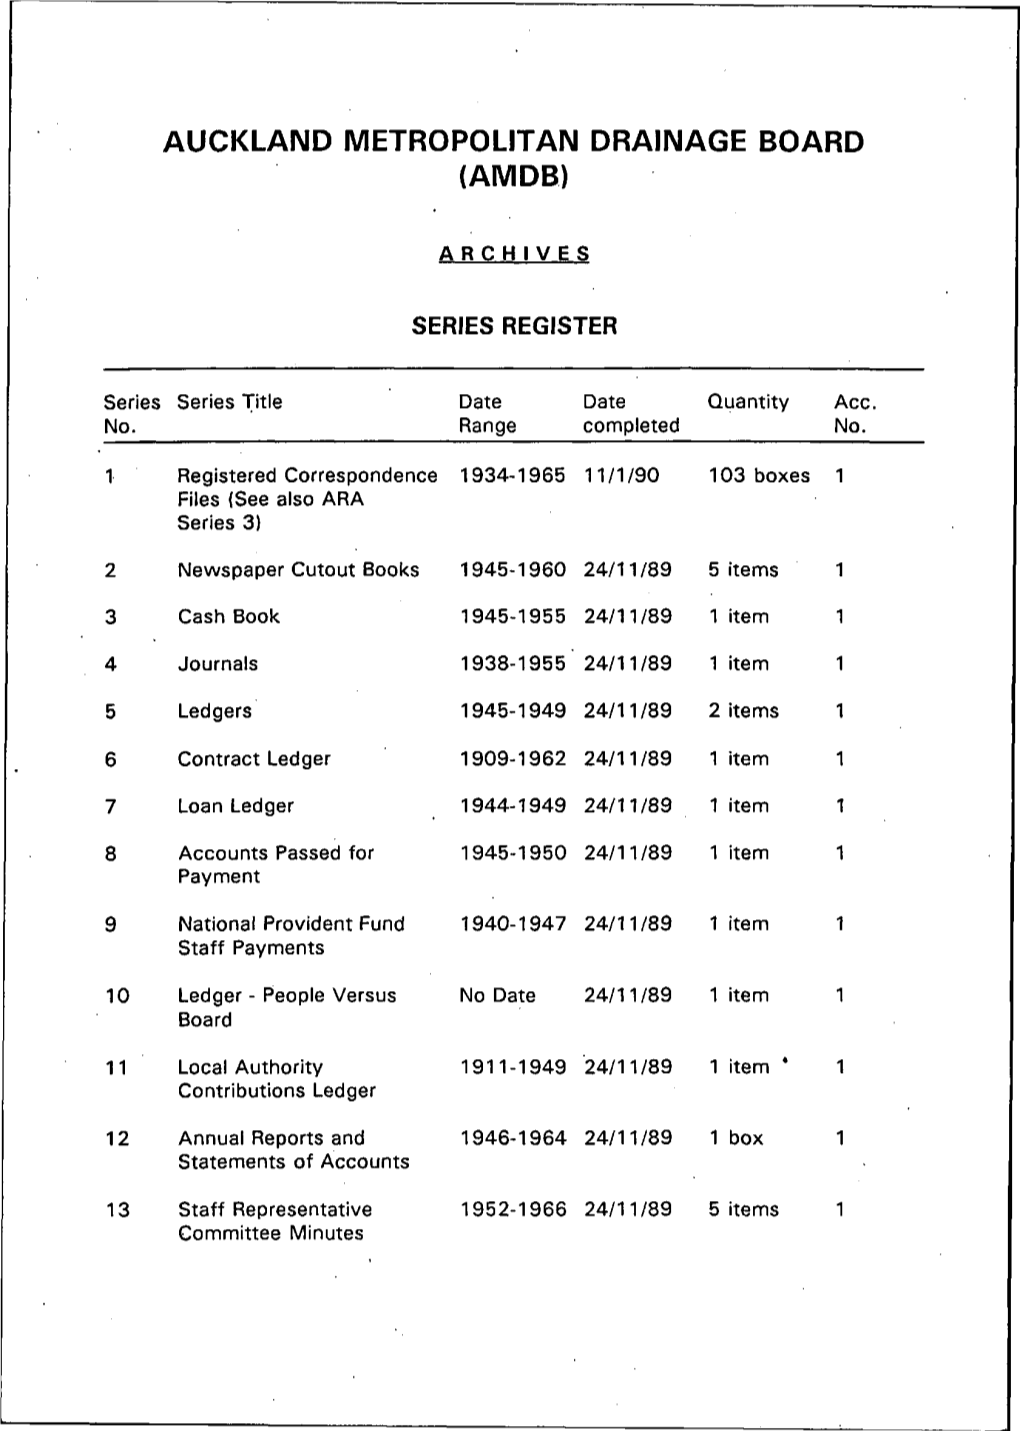 Auckland Metropolitan Drainage Board: Archives Series Register